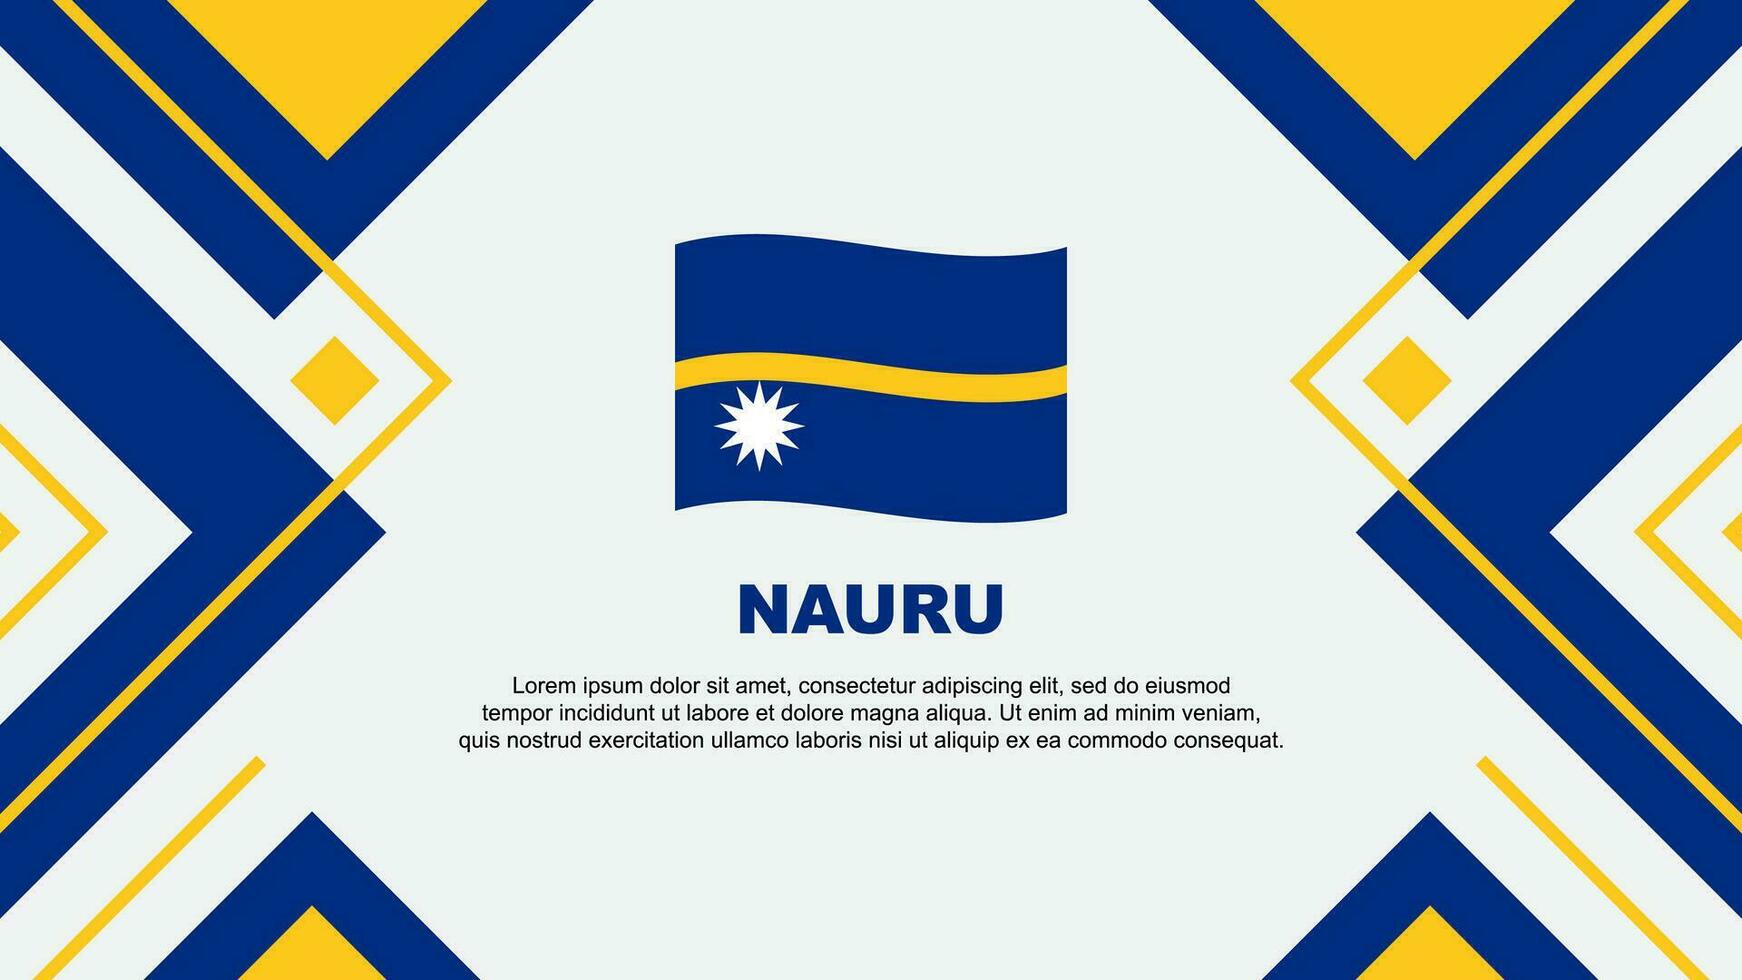 Nauru Flag Abstract Background Design Template. Nauru Independence Day Banner Wallpaper Vector Illustration. Nauru Illustration